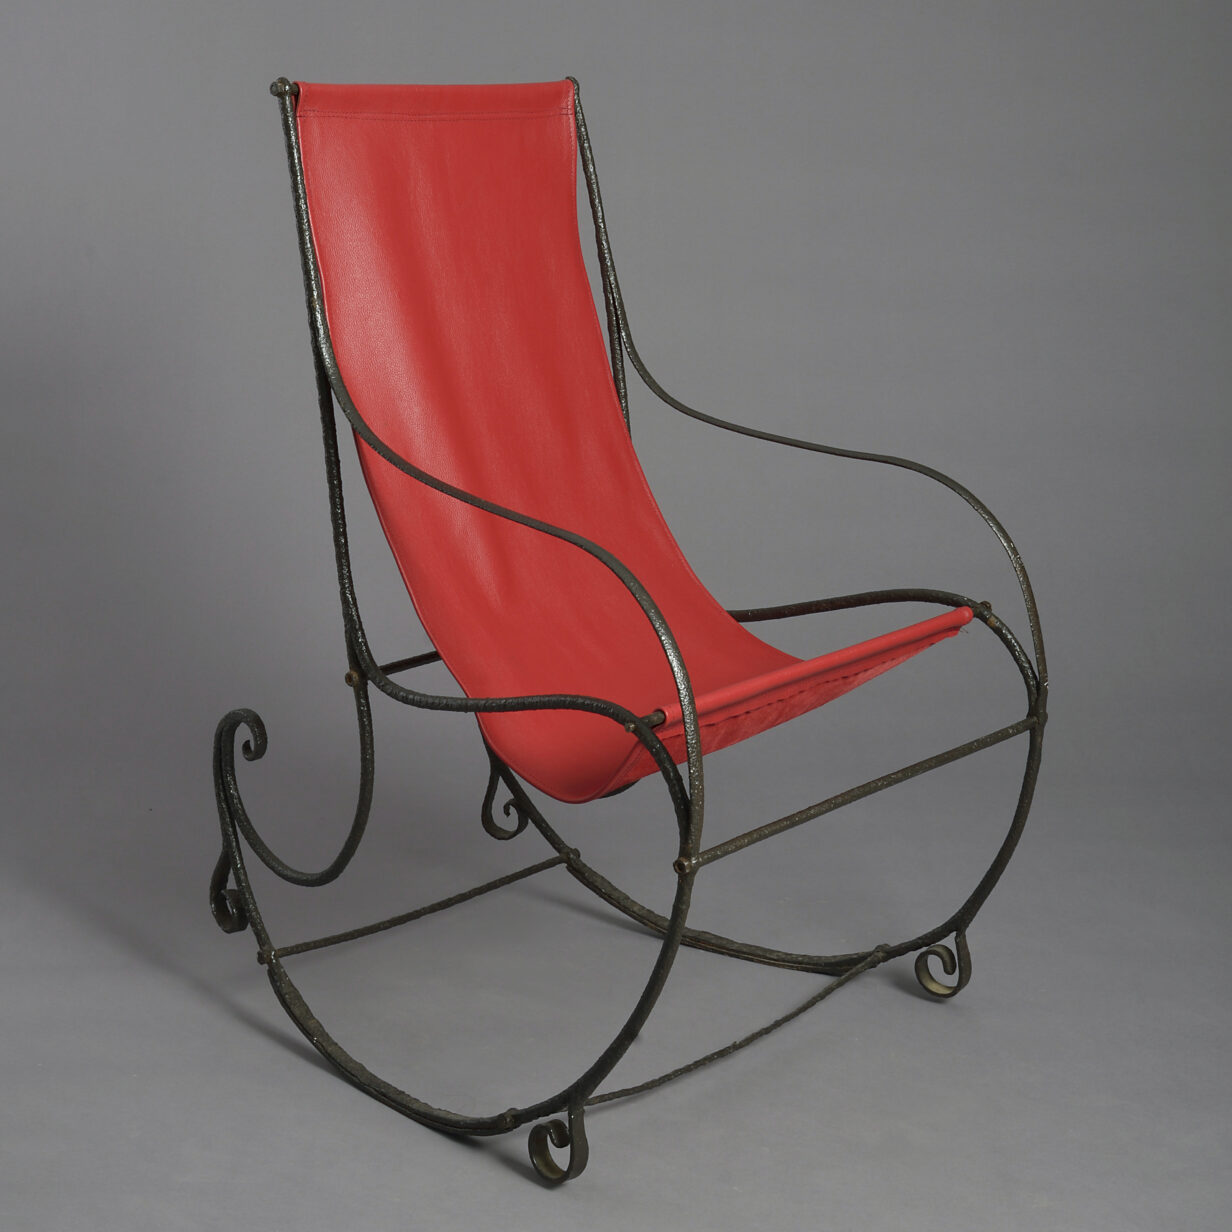 Regency rocking chair